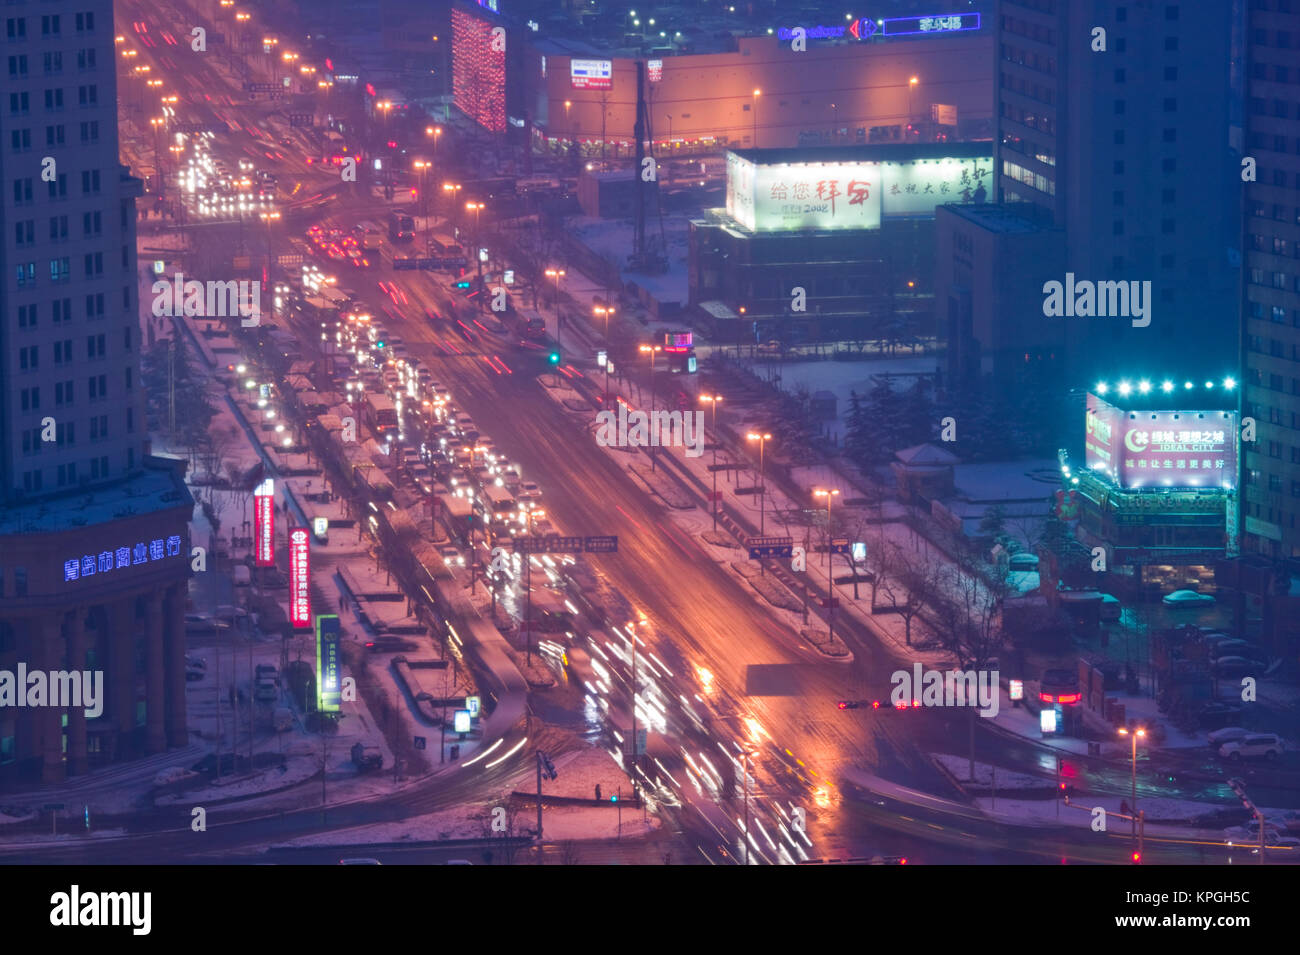 China, Provinz Shandong, Jinan. Qingdao Neue Stadt - Luftaufnahme von Rush Hour Traffic auf xianggang Zhonglu mit Schnee / Abend. Stockfoto